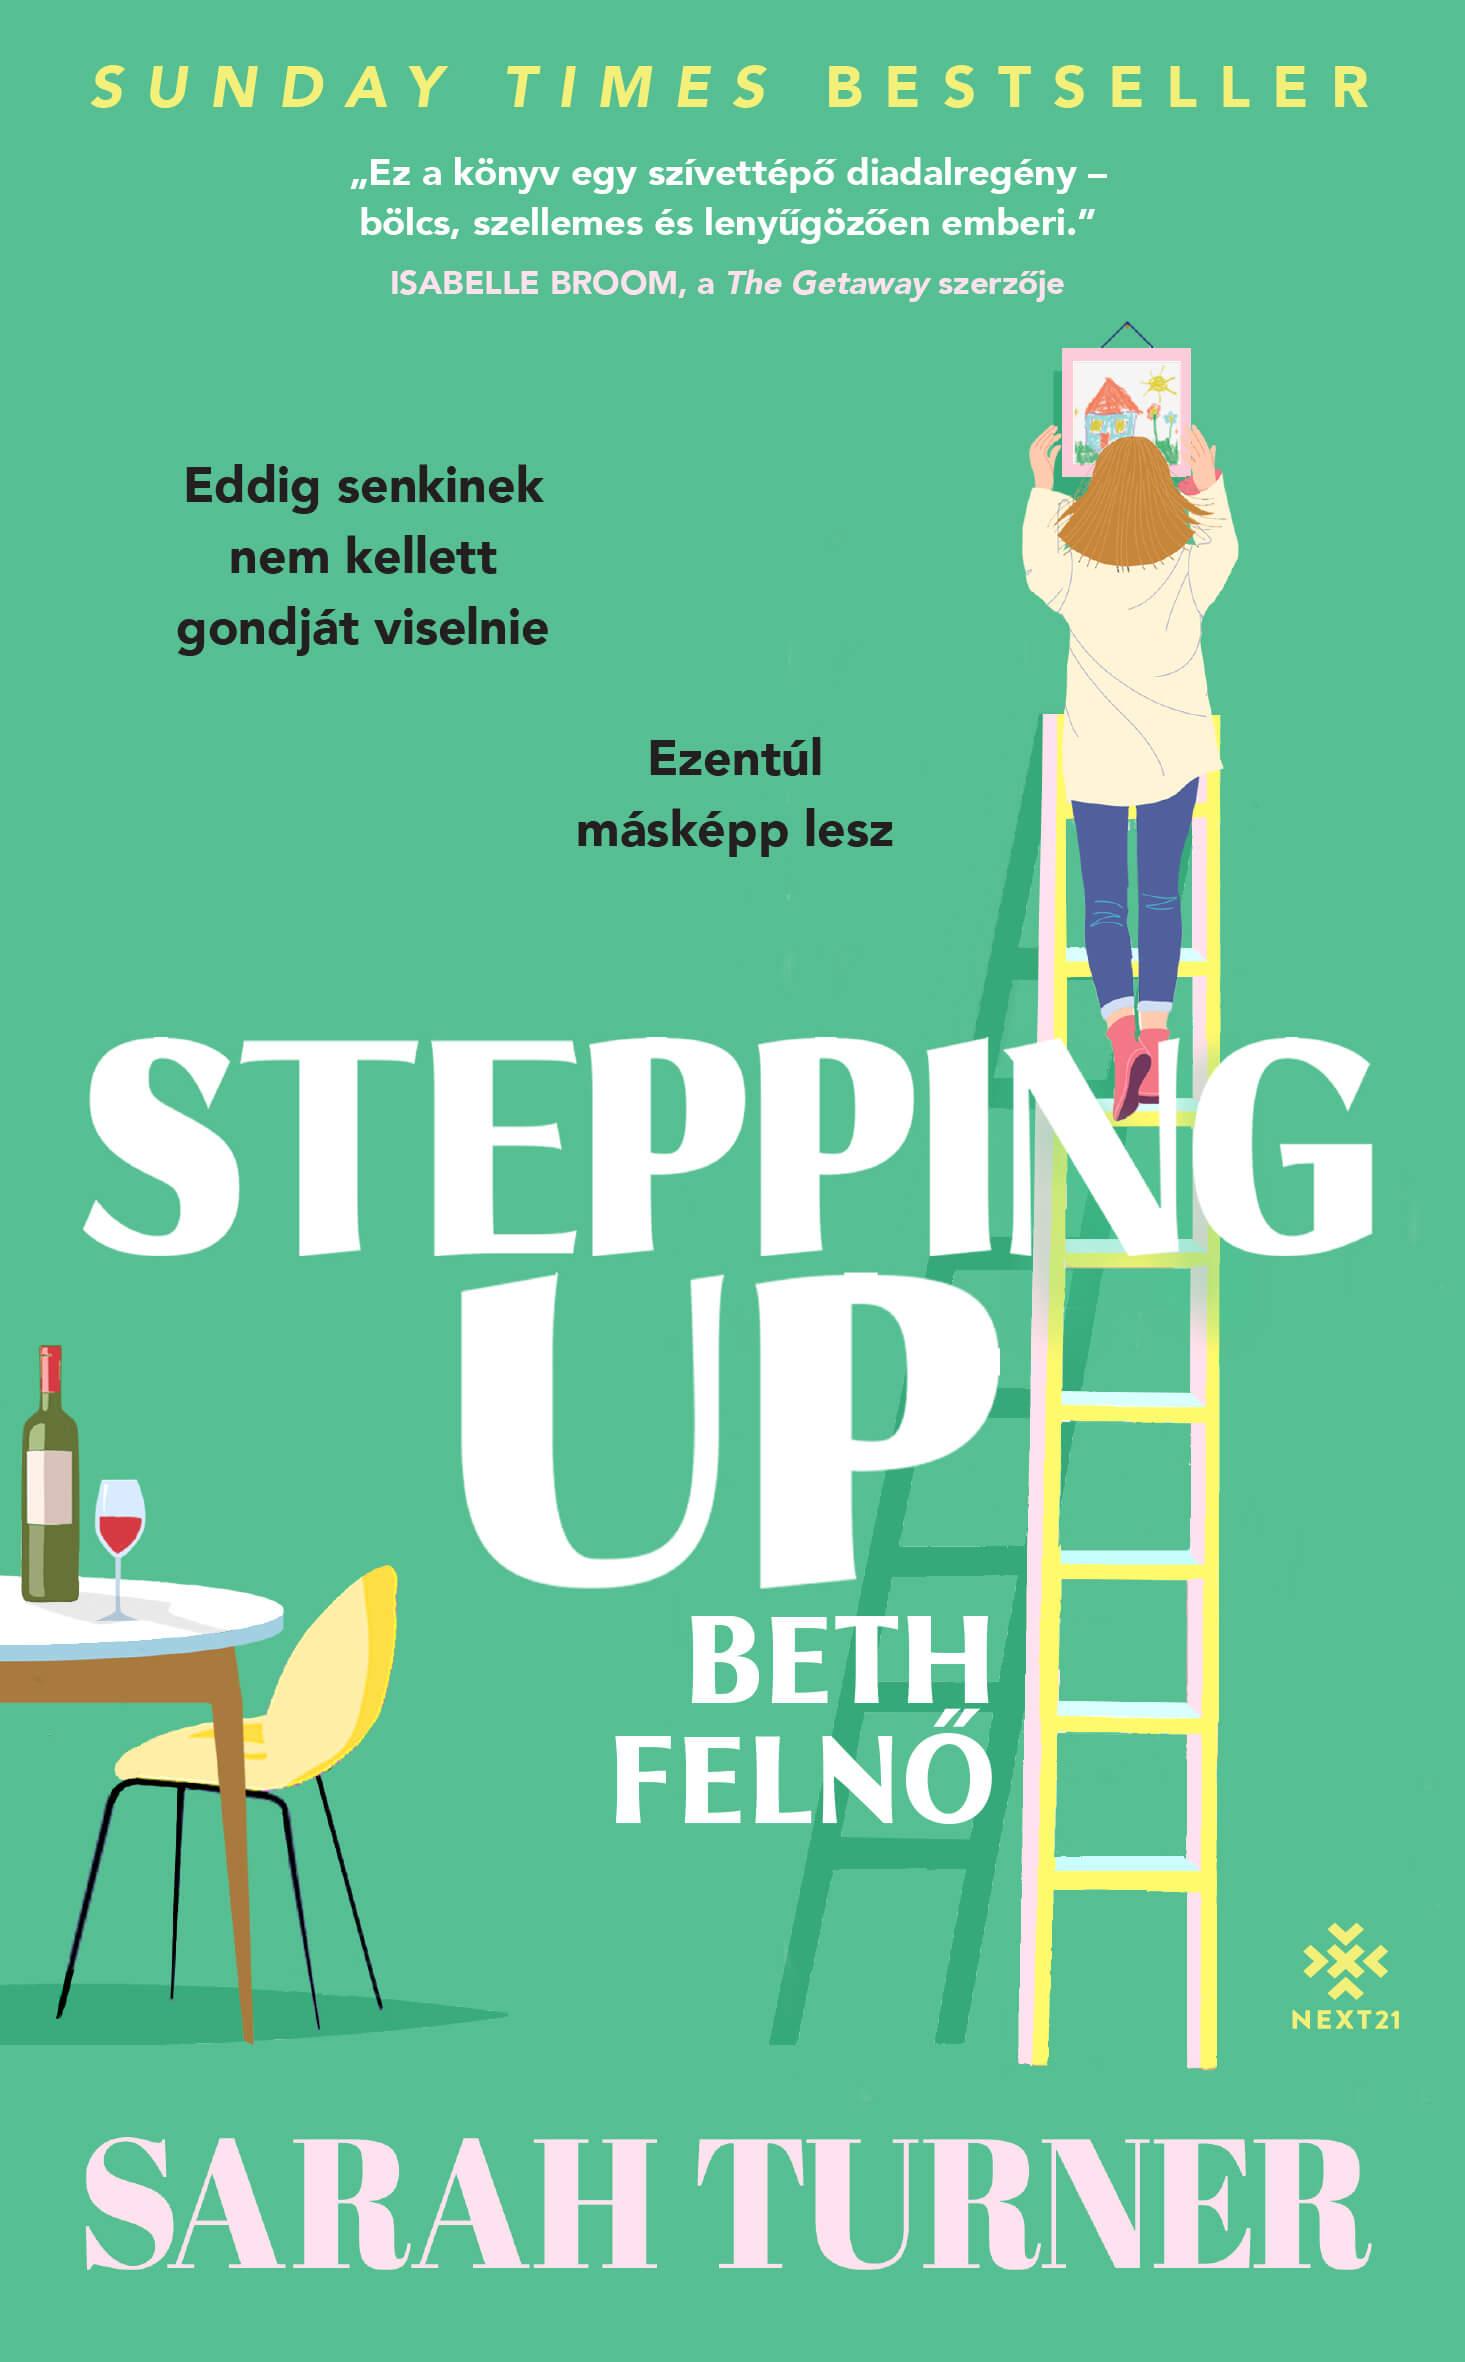 Stepping Up – Beth felnő